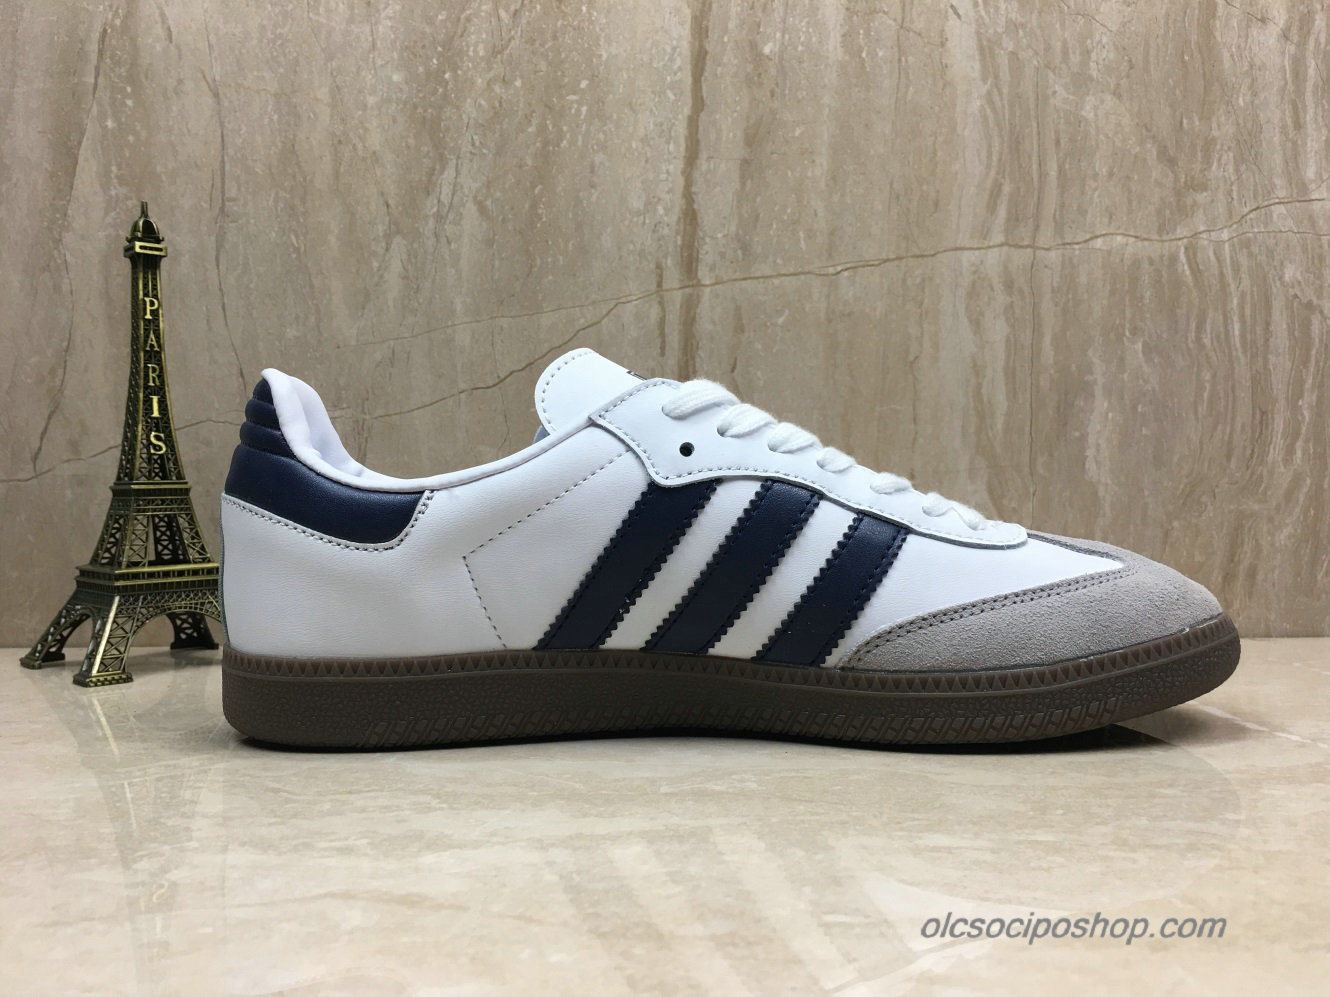 Adidas Samba OG Fehér/Sötétkék/Szürke Cipők (B75681)